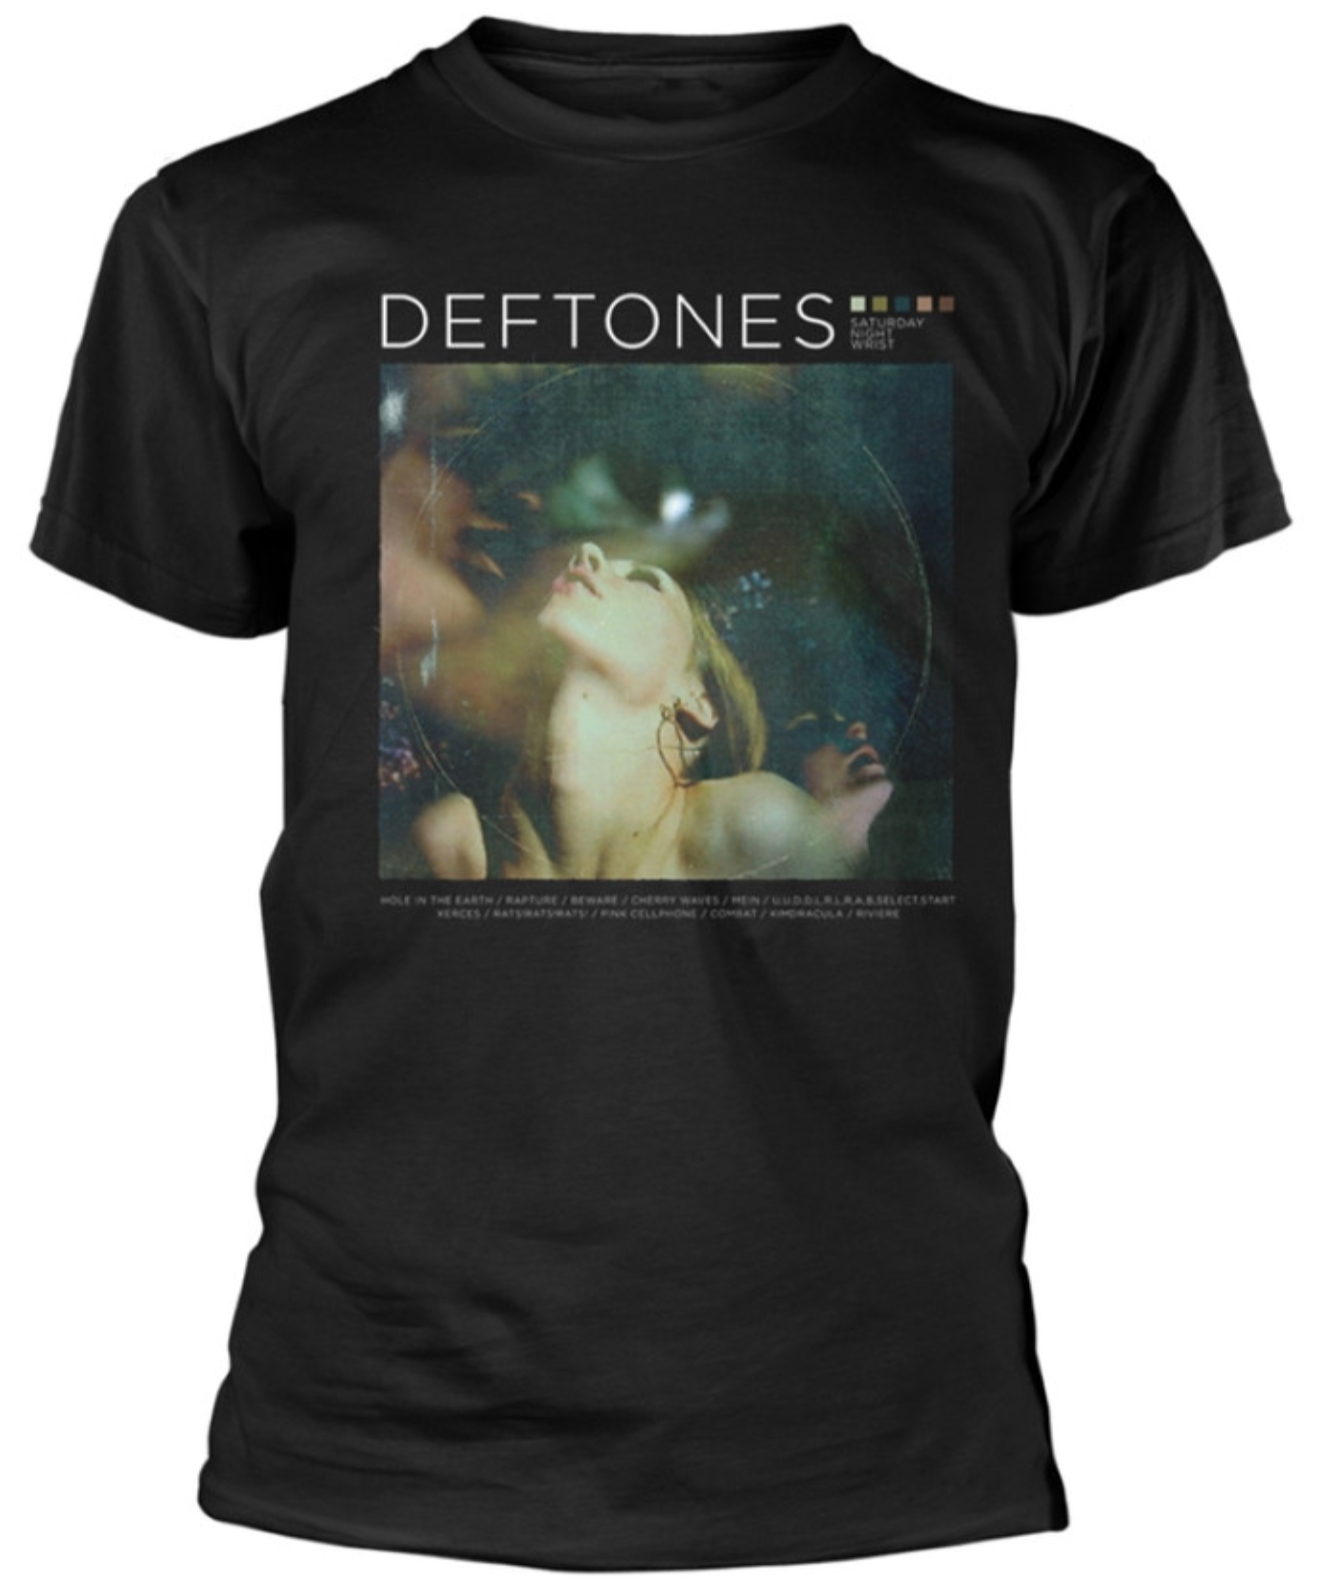 Deftones - Saturday Night Wrist - T-Shirt Unisex Official Merch